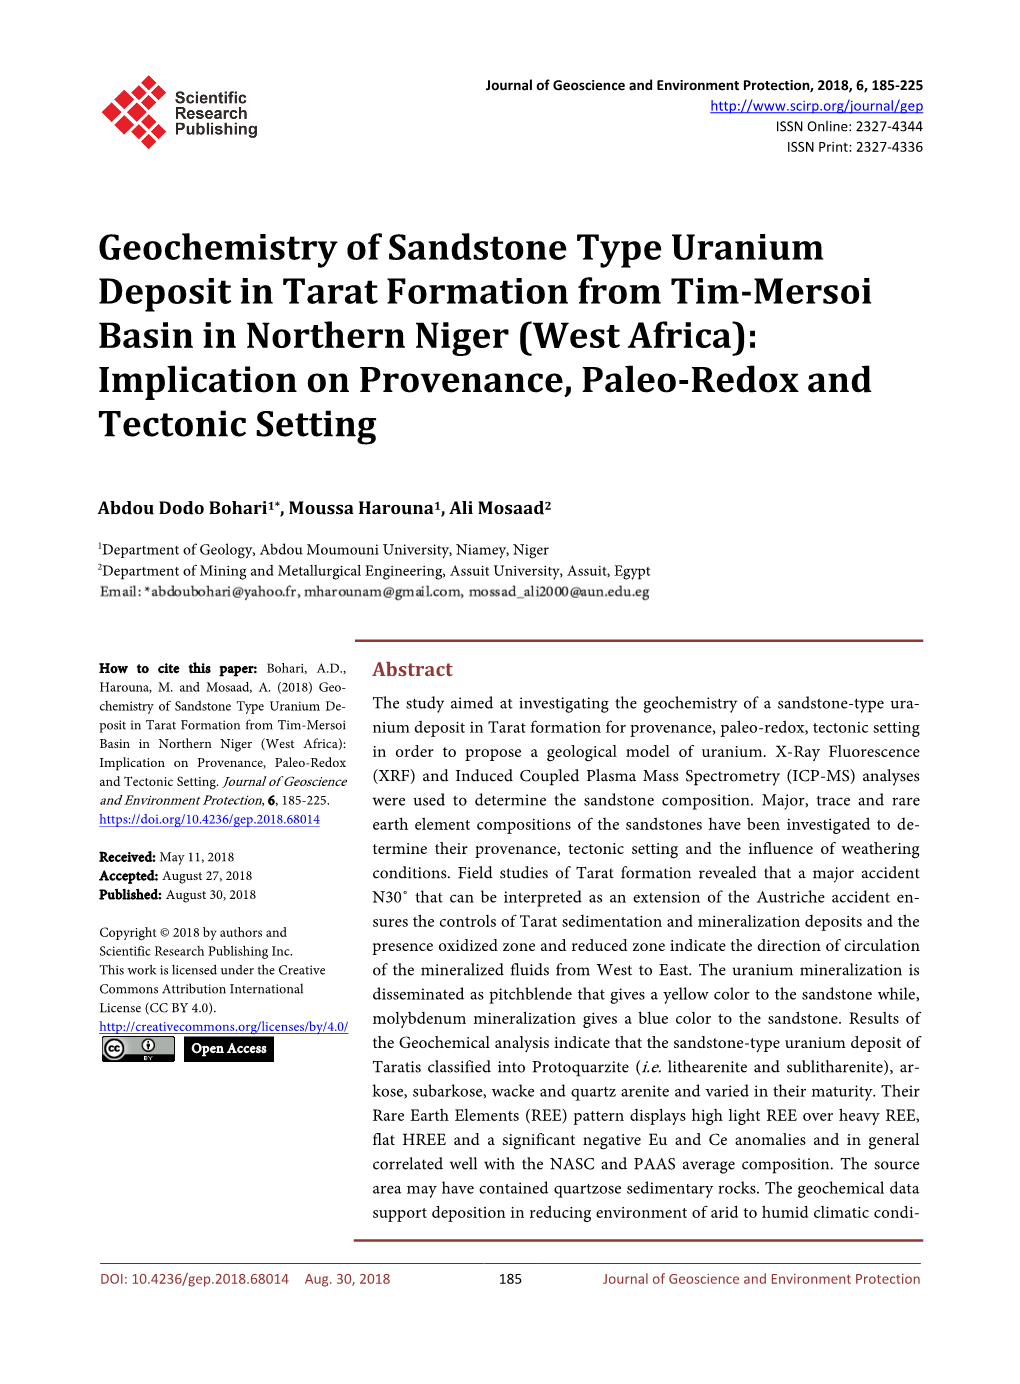 Geochemistry of Sandstone Type Uranium Deposit in Tarat Formation from Tim-Mersoi Basin in Northern Niger